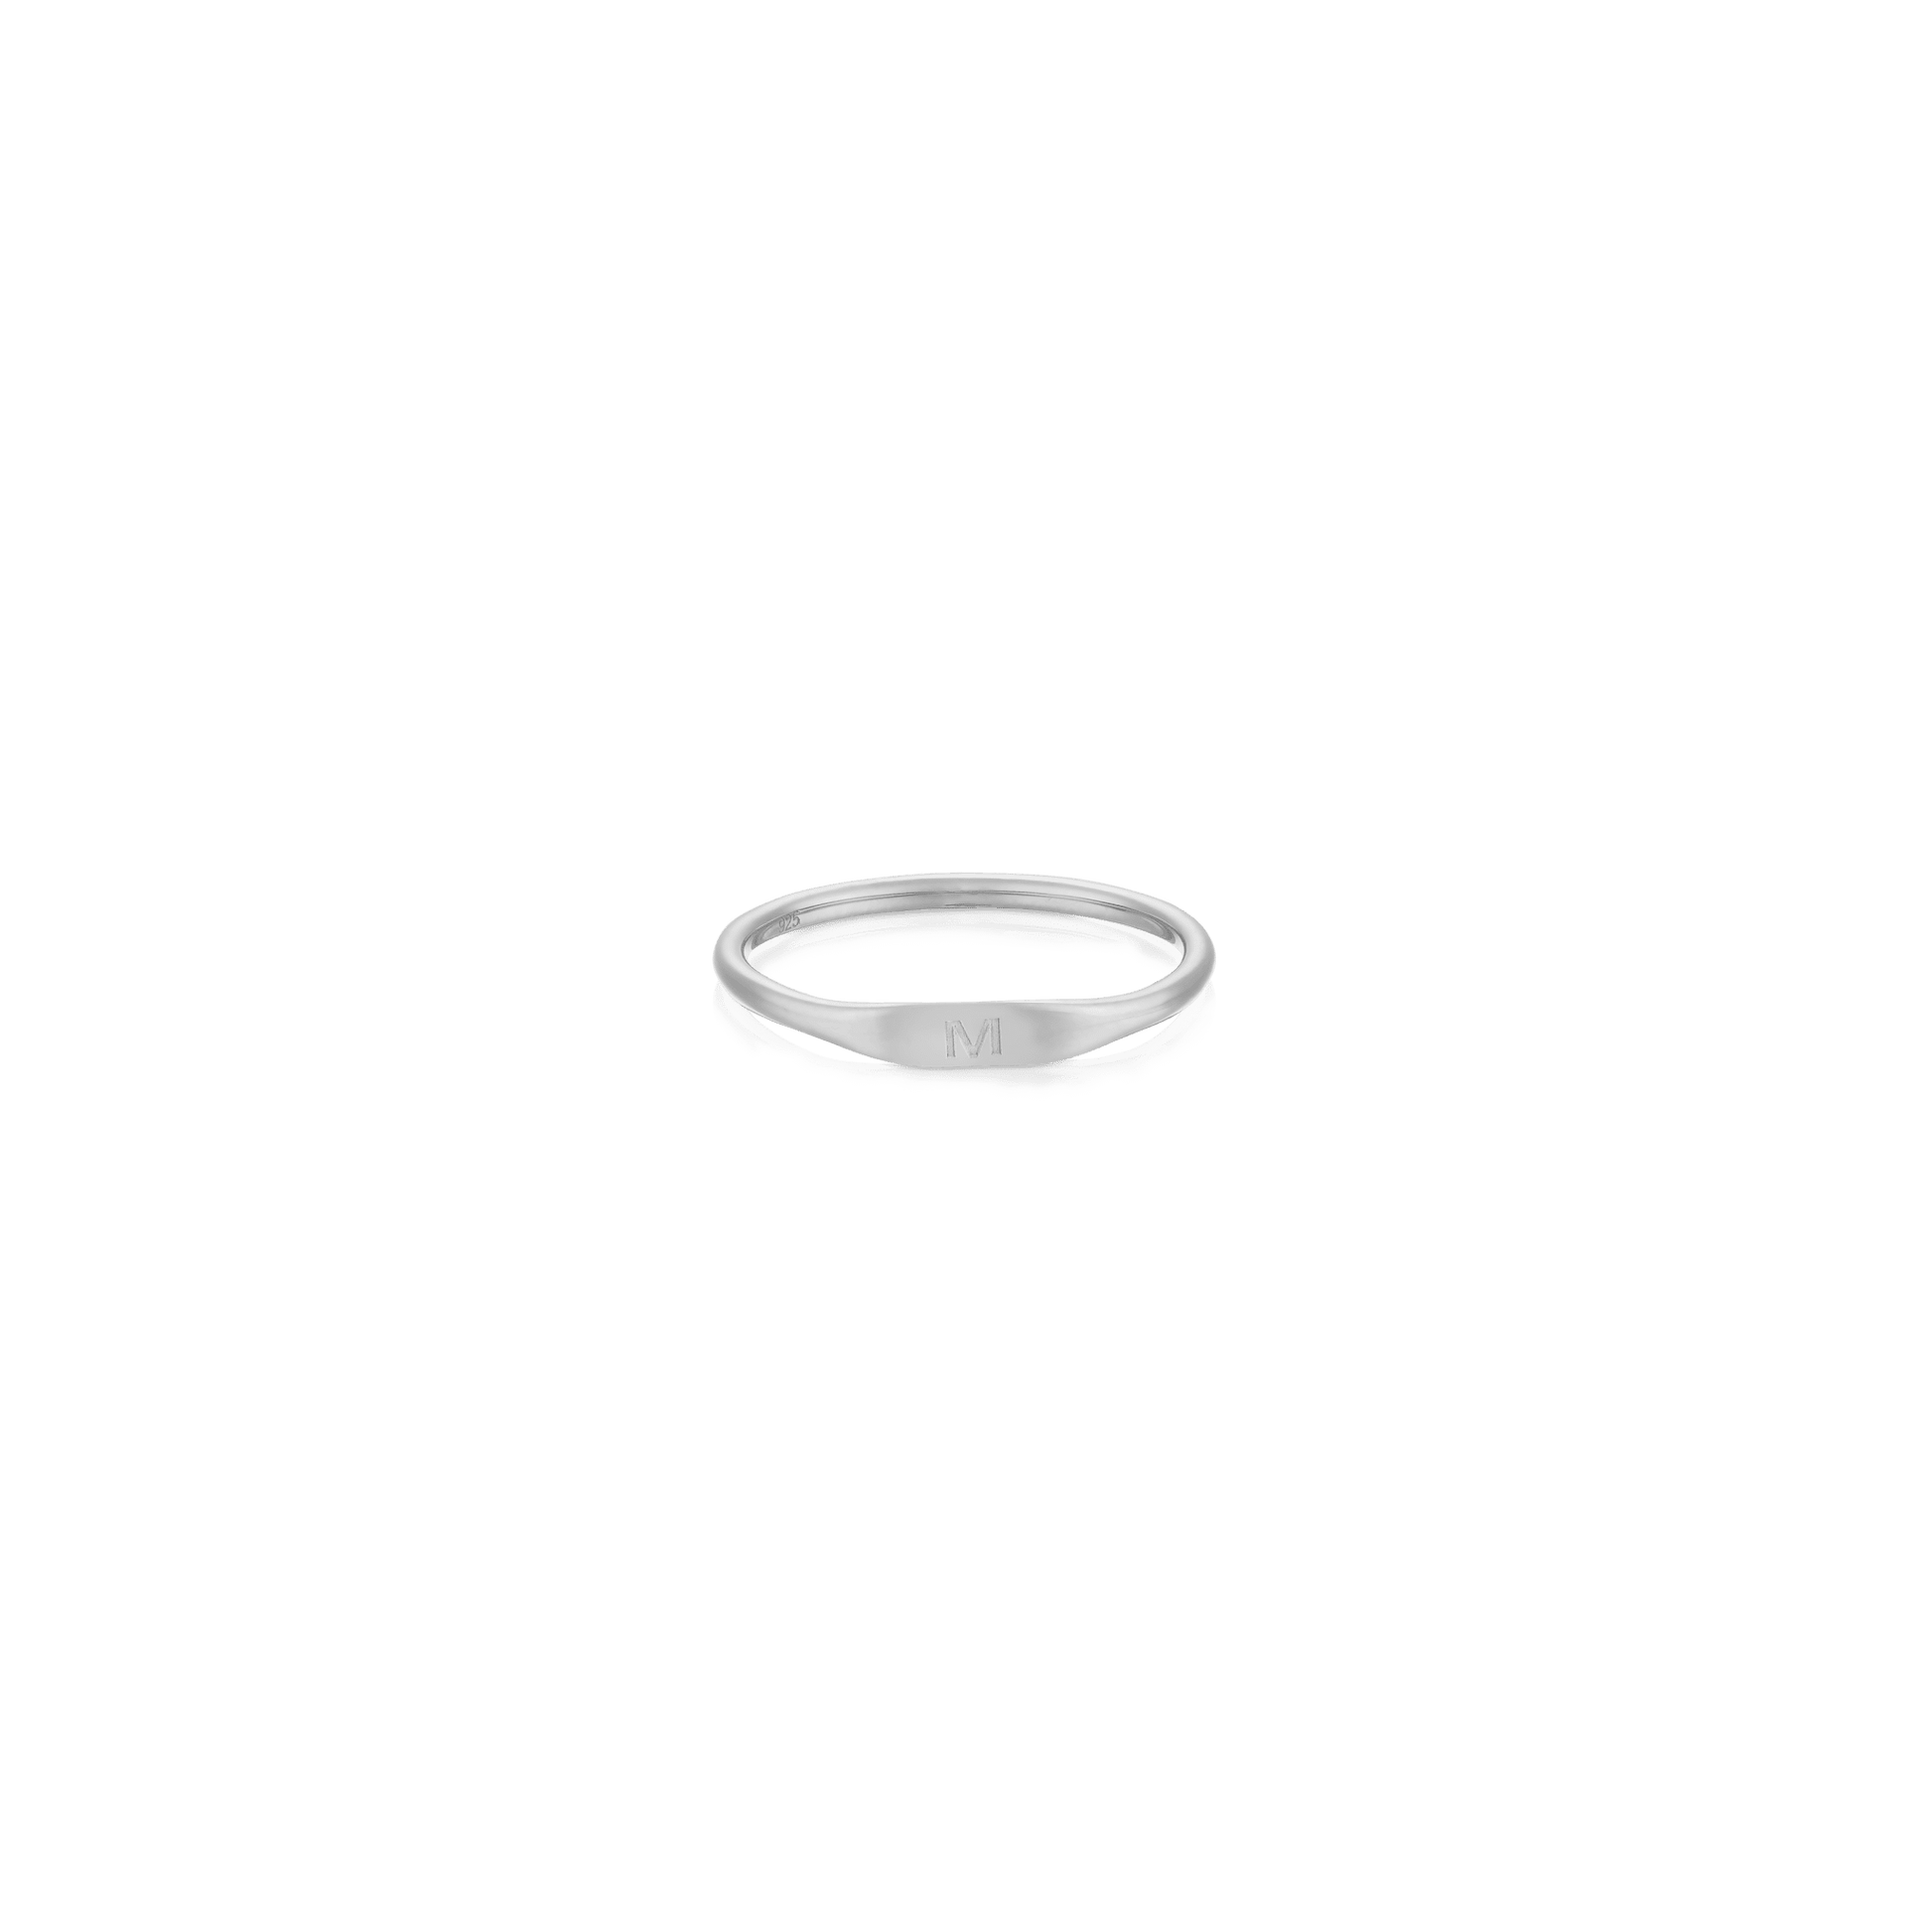 It Ring - 925 Sterling Silver Rings magal-dev US 4 